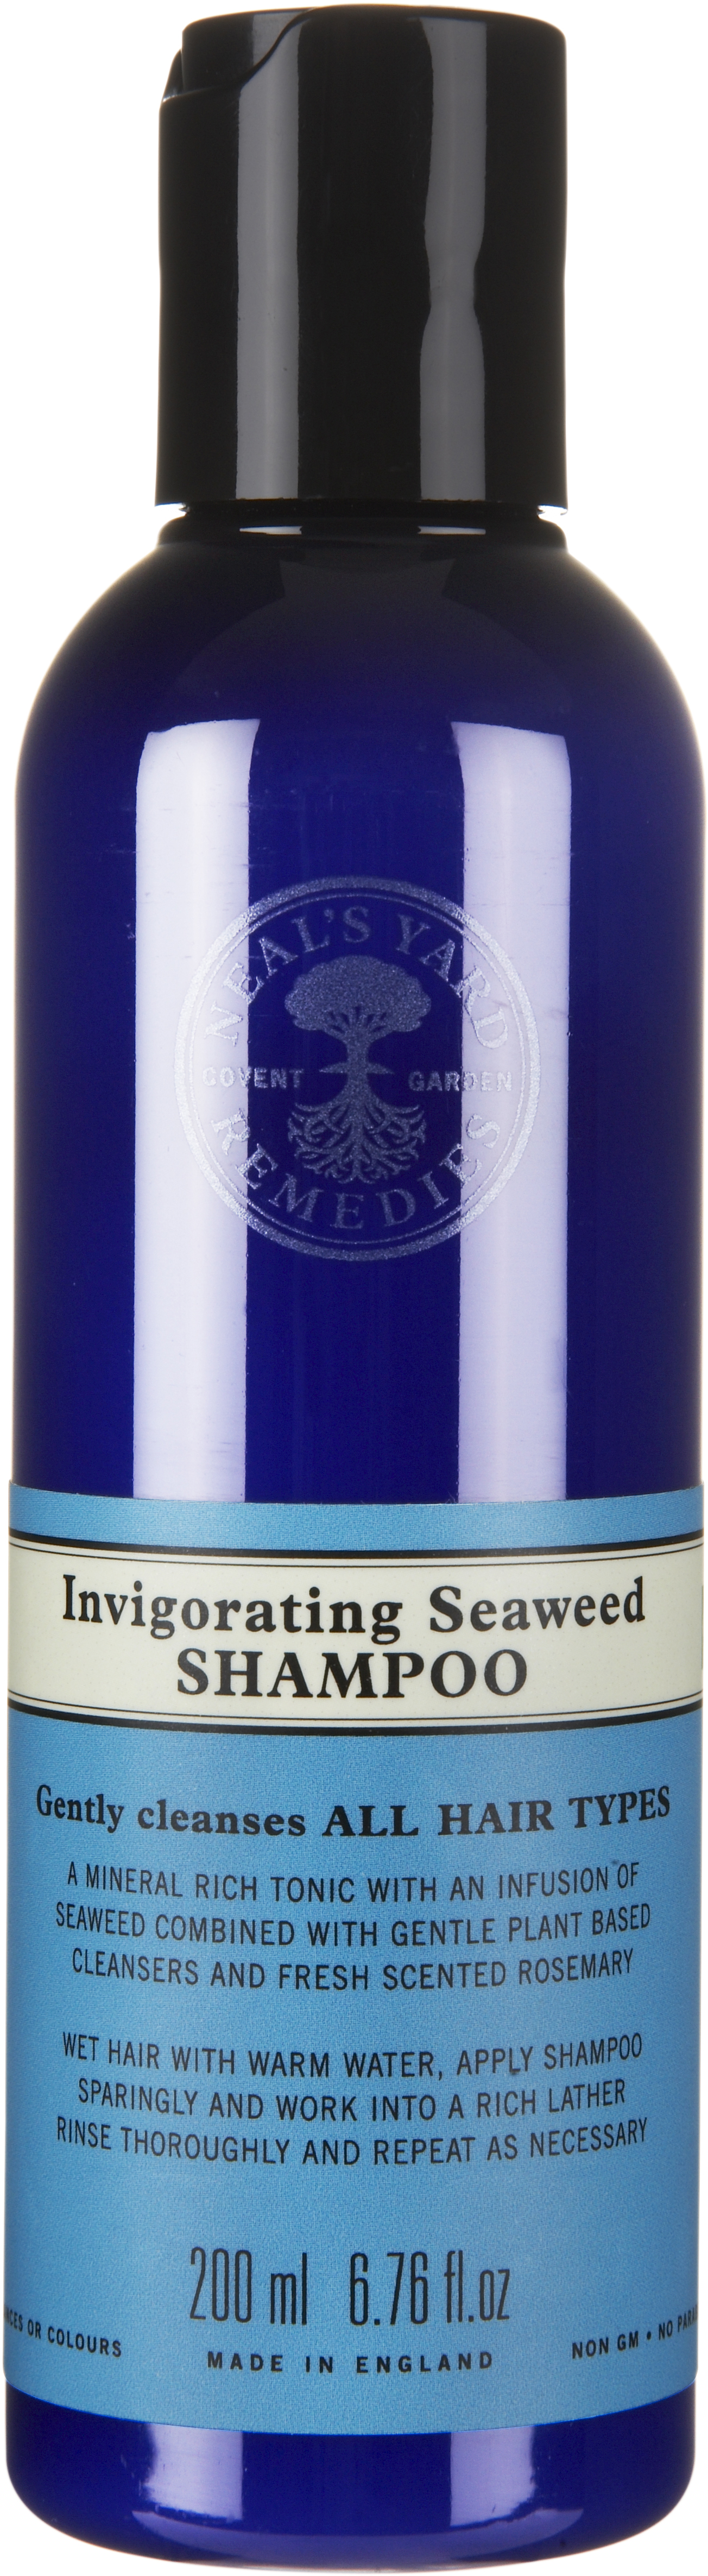 Neal’s Yard Remedies Invigorating Seaweed Shampoo